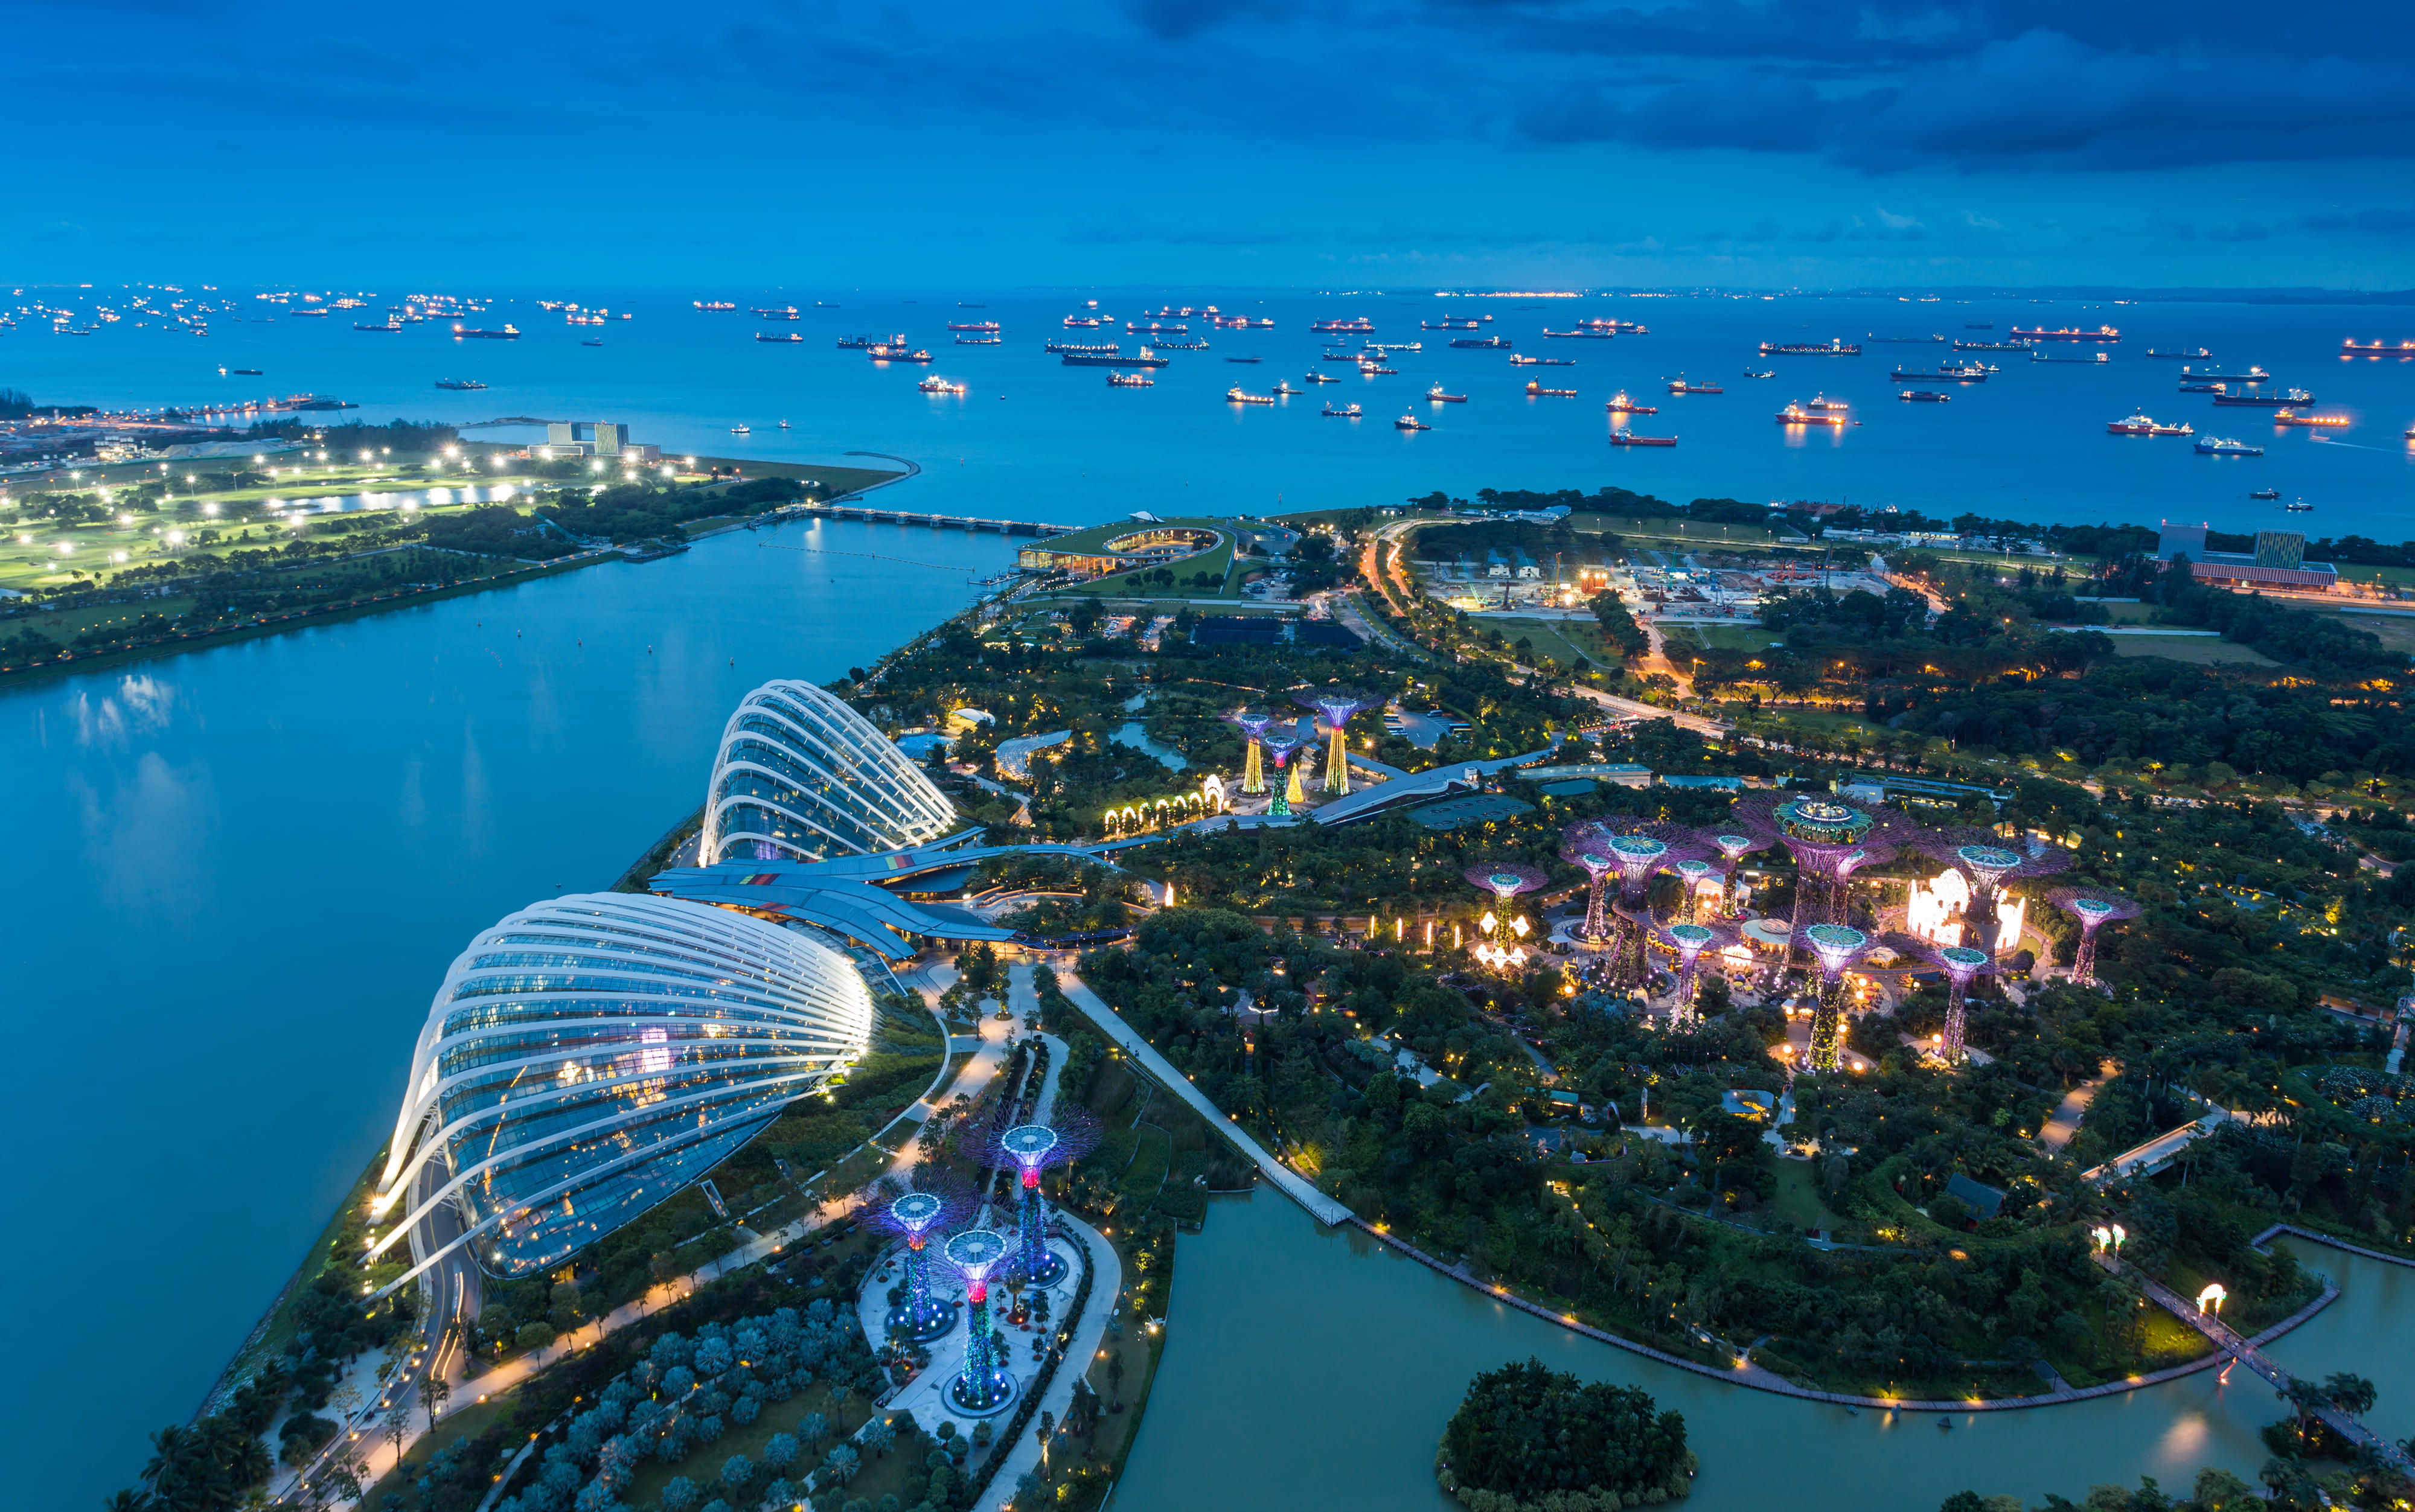 Explore the diverse wonders of Singapore's islands